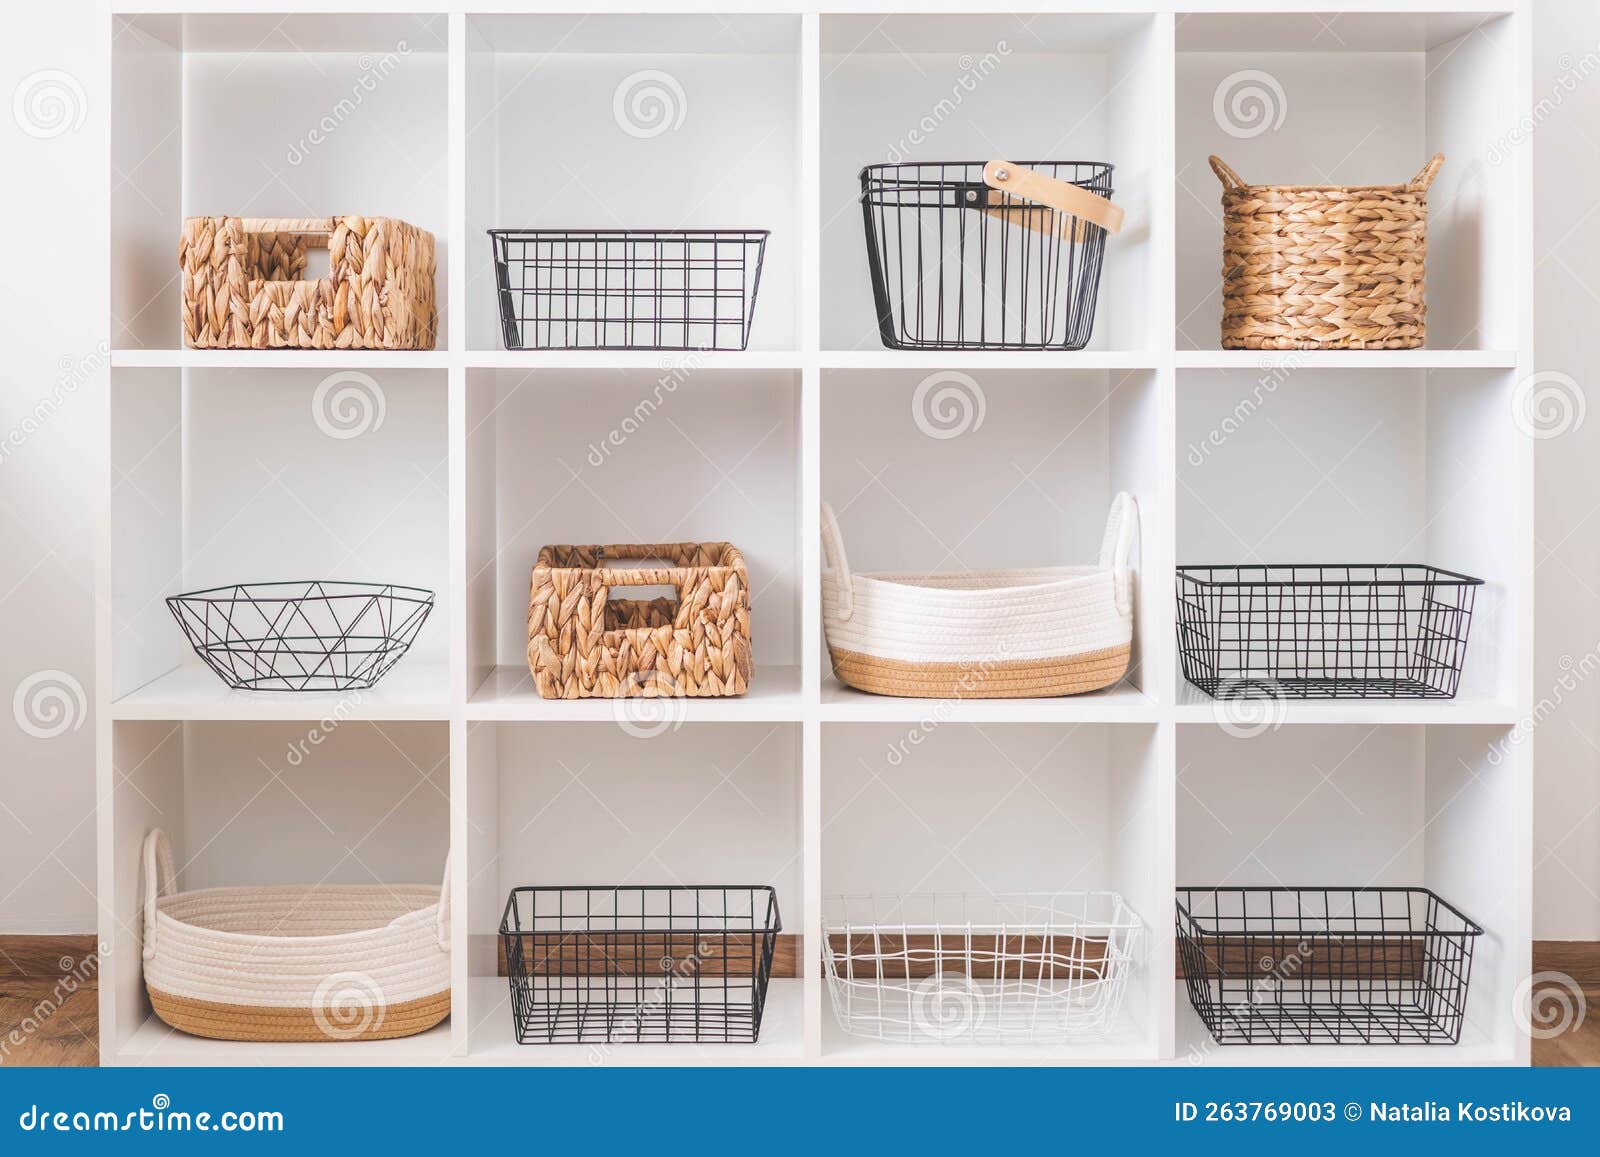 https://thumbs.dreamstime.com/z/white-stylish-shelf-scandi-style-storage-baskets-japanese-method-organizer-boxes-set-closet-organizing-concept-263769003.jpg